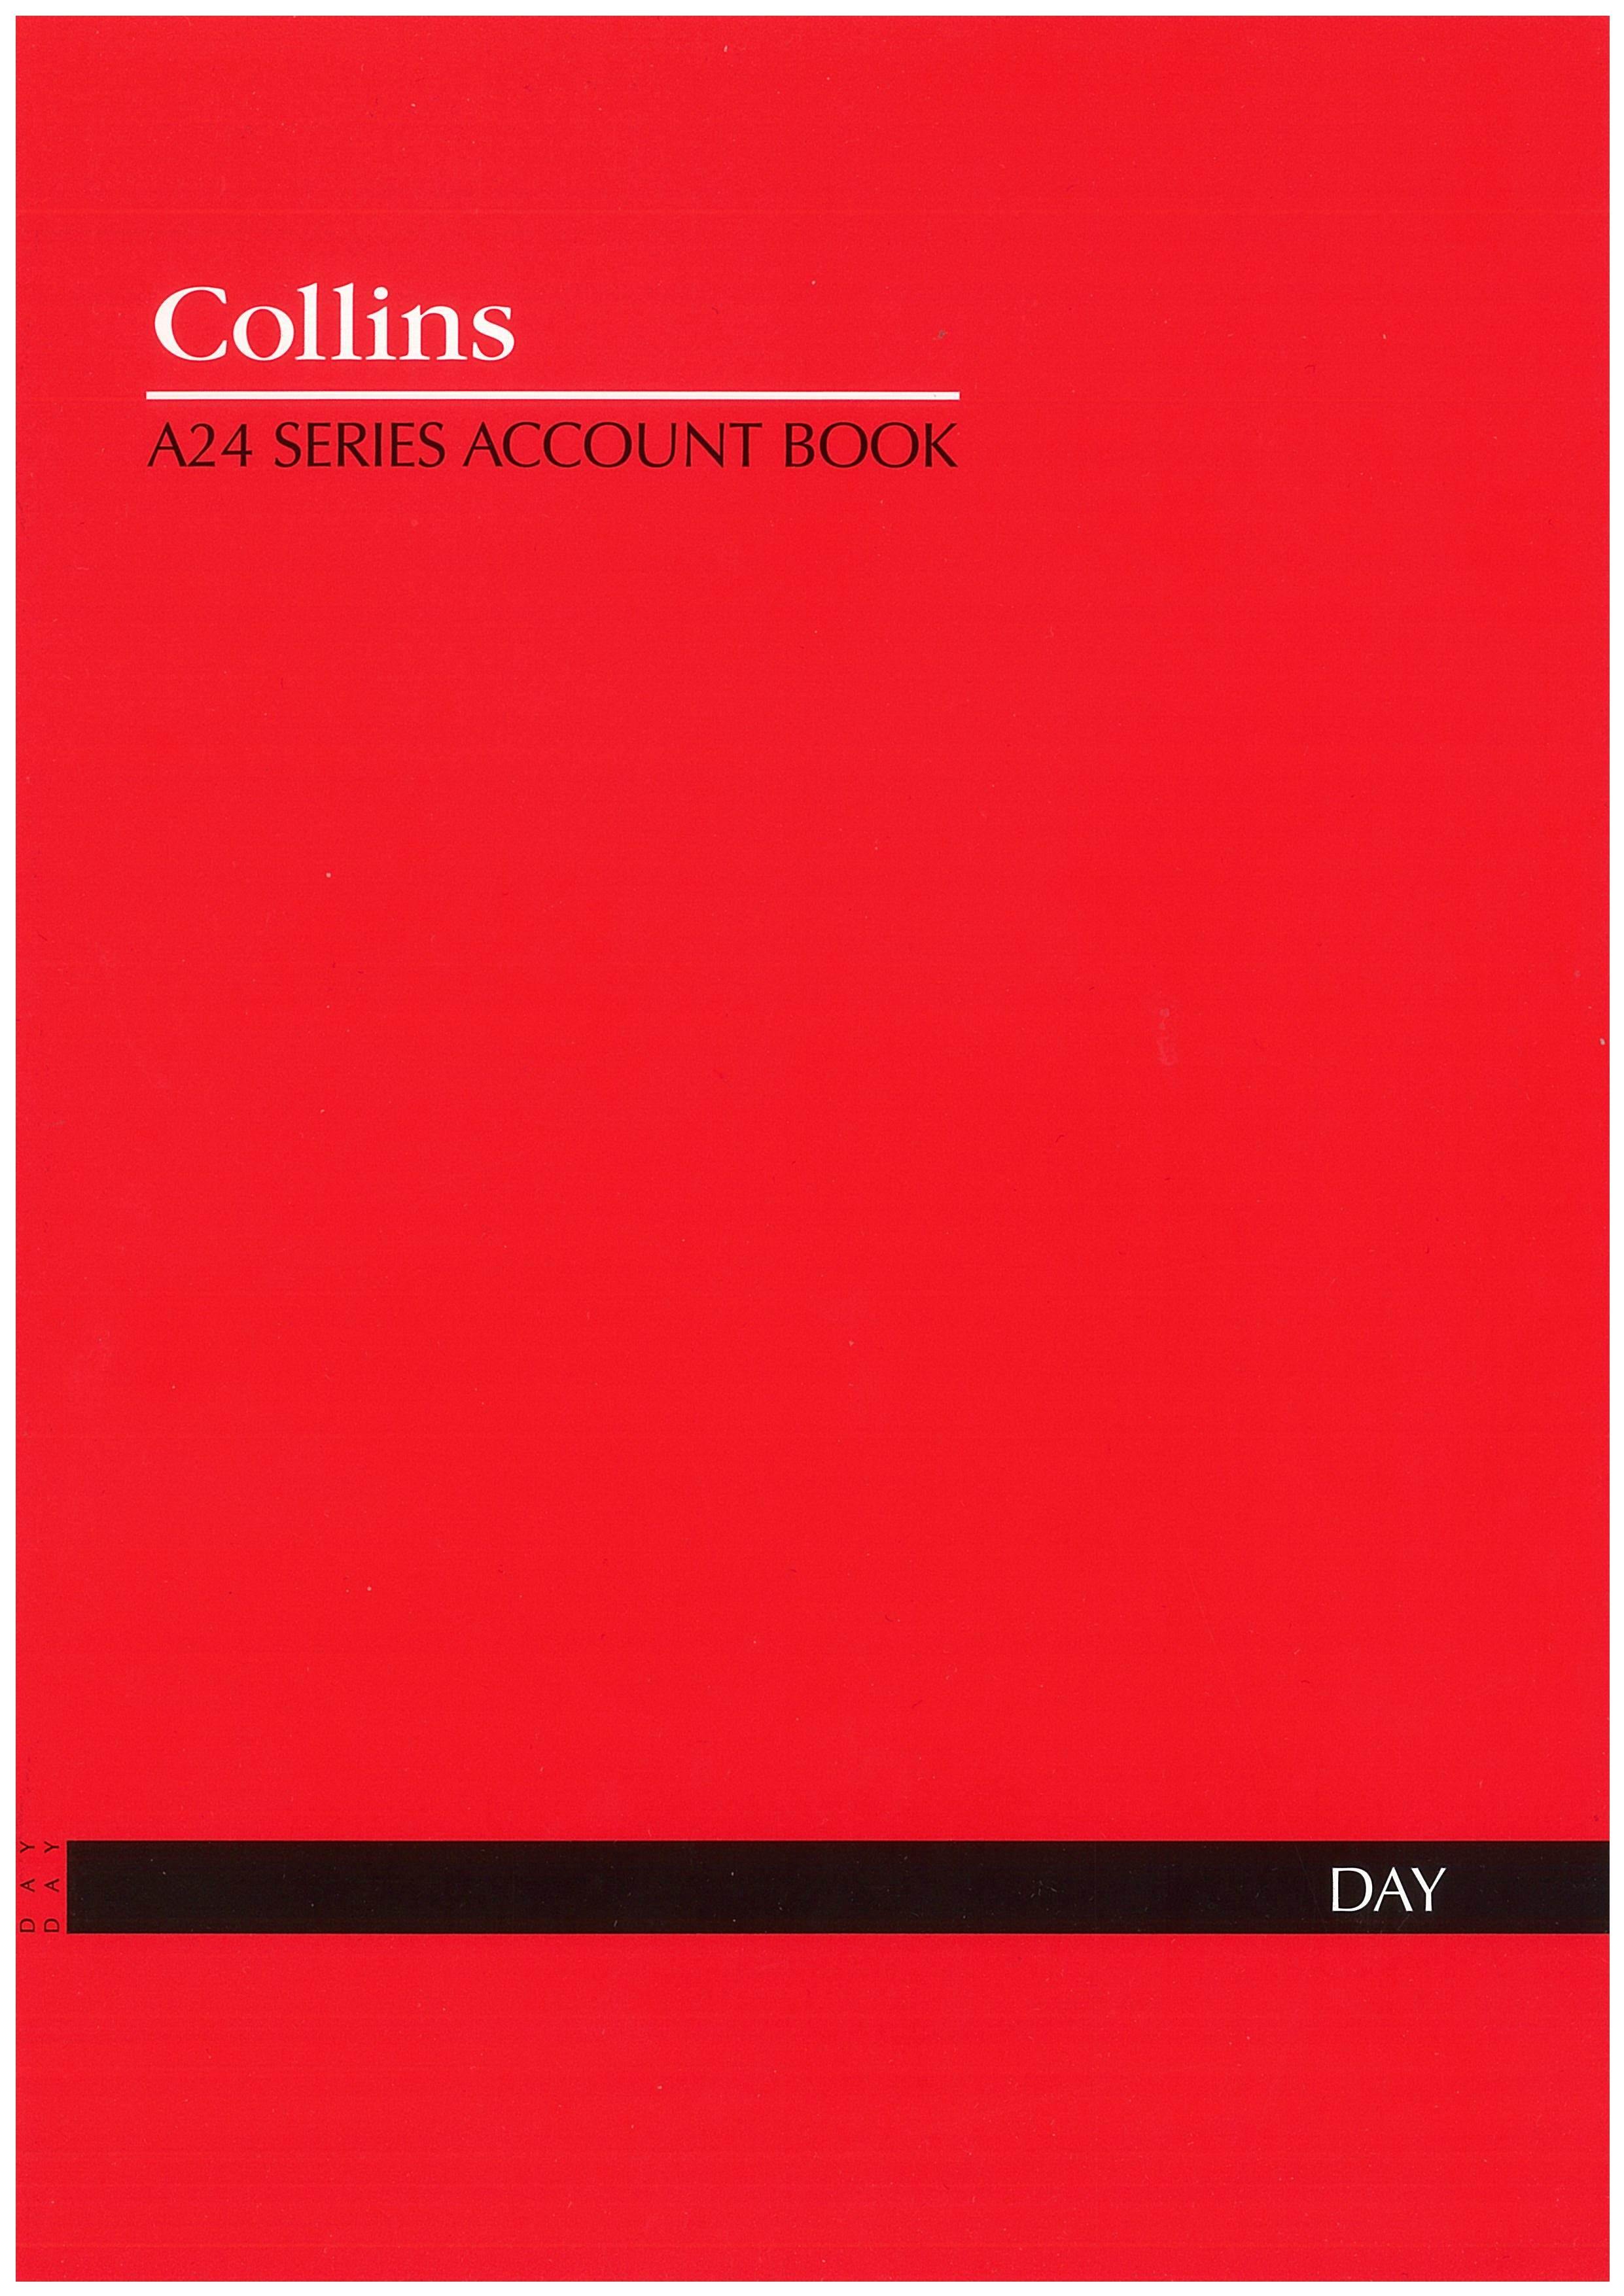 Account Book Series 'A24' Day - Collins Debden